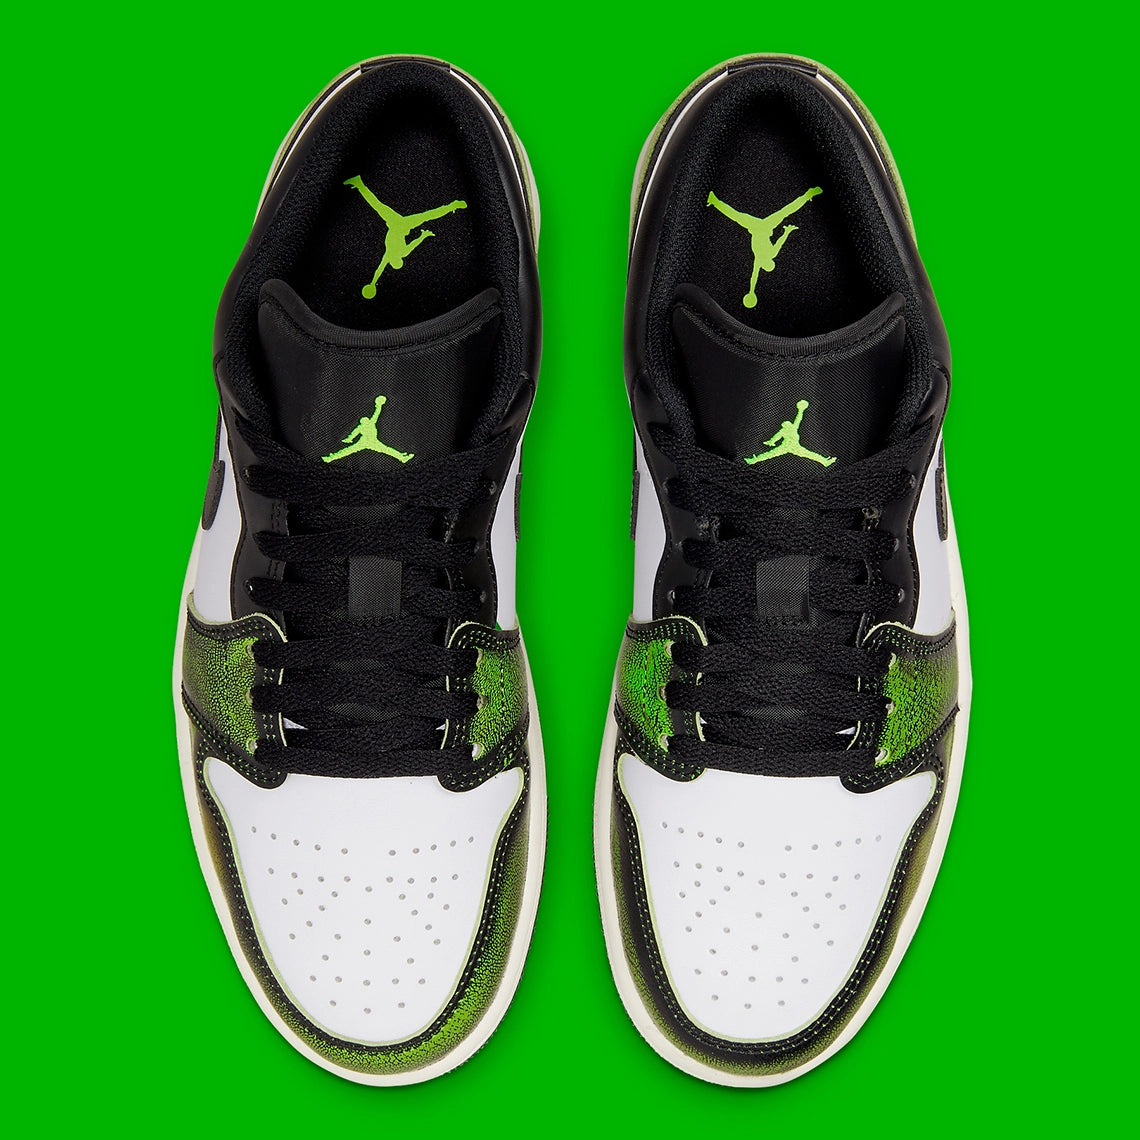 Jordan 1 Low "White Black Green"